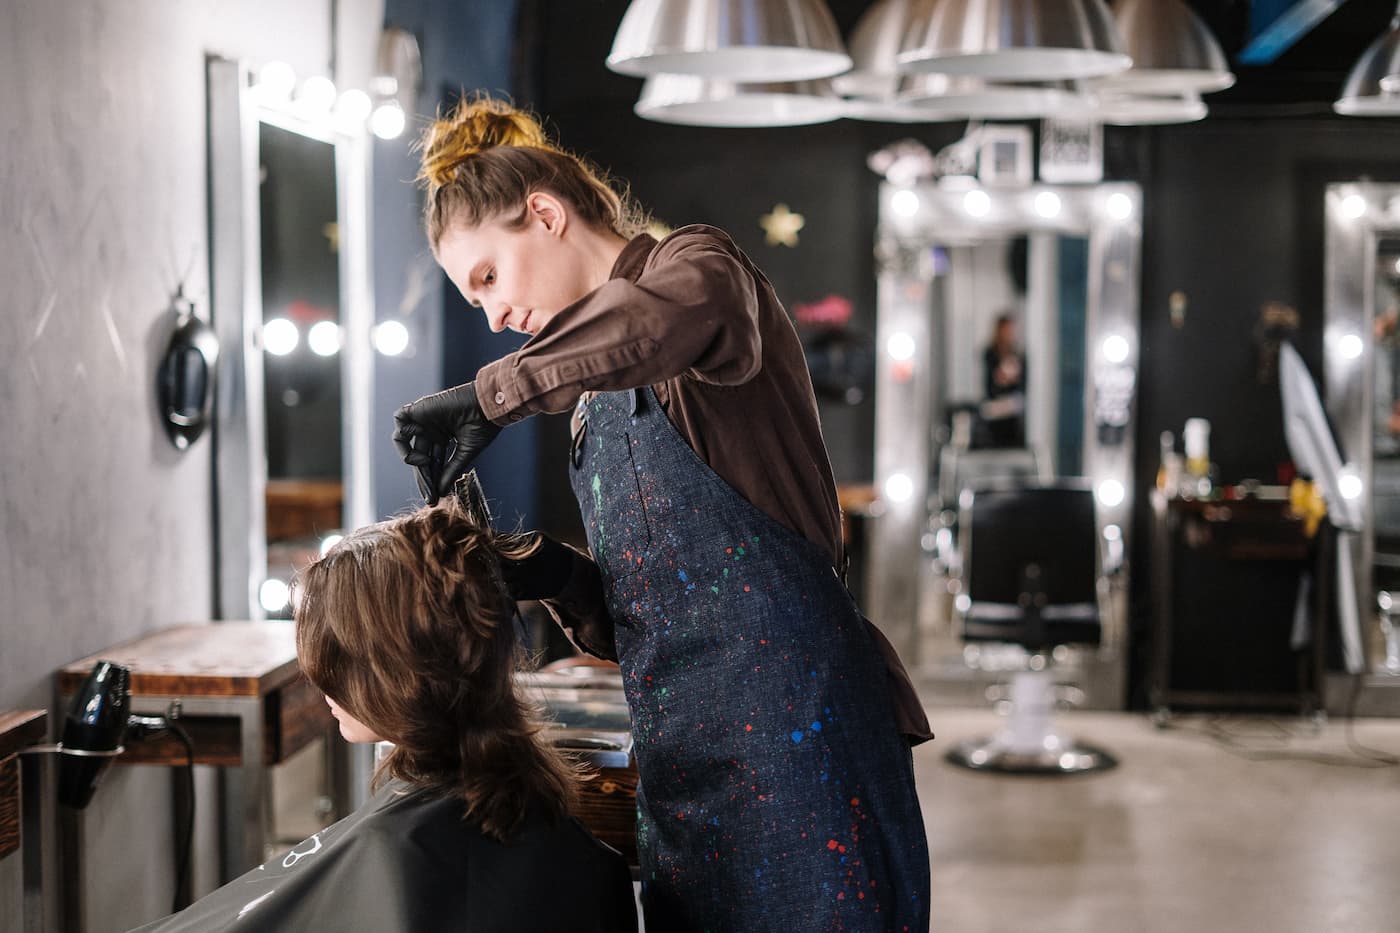 Stylist cutting woman's hair at salon